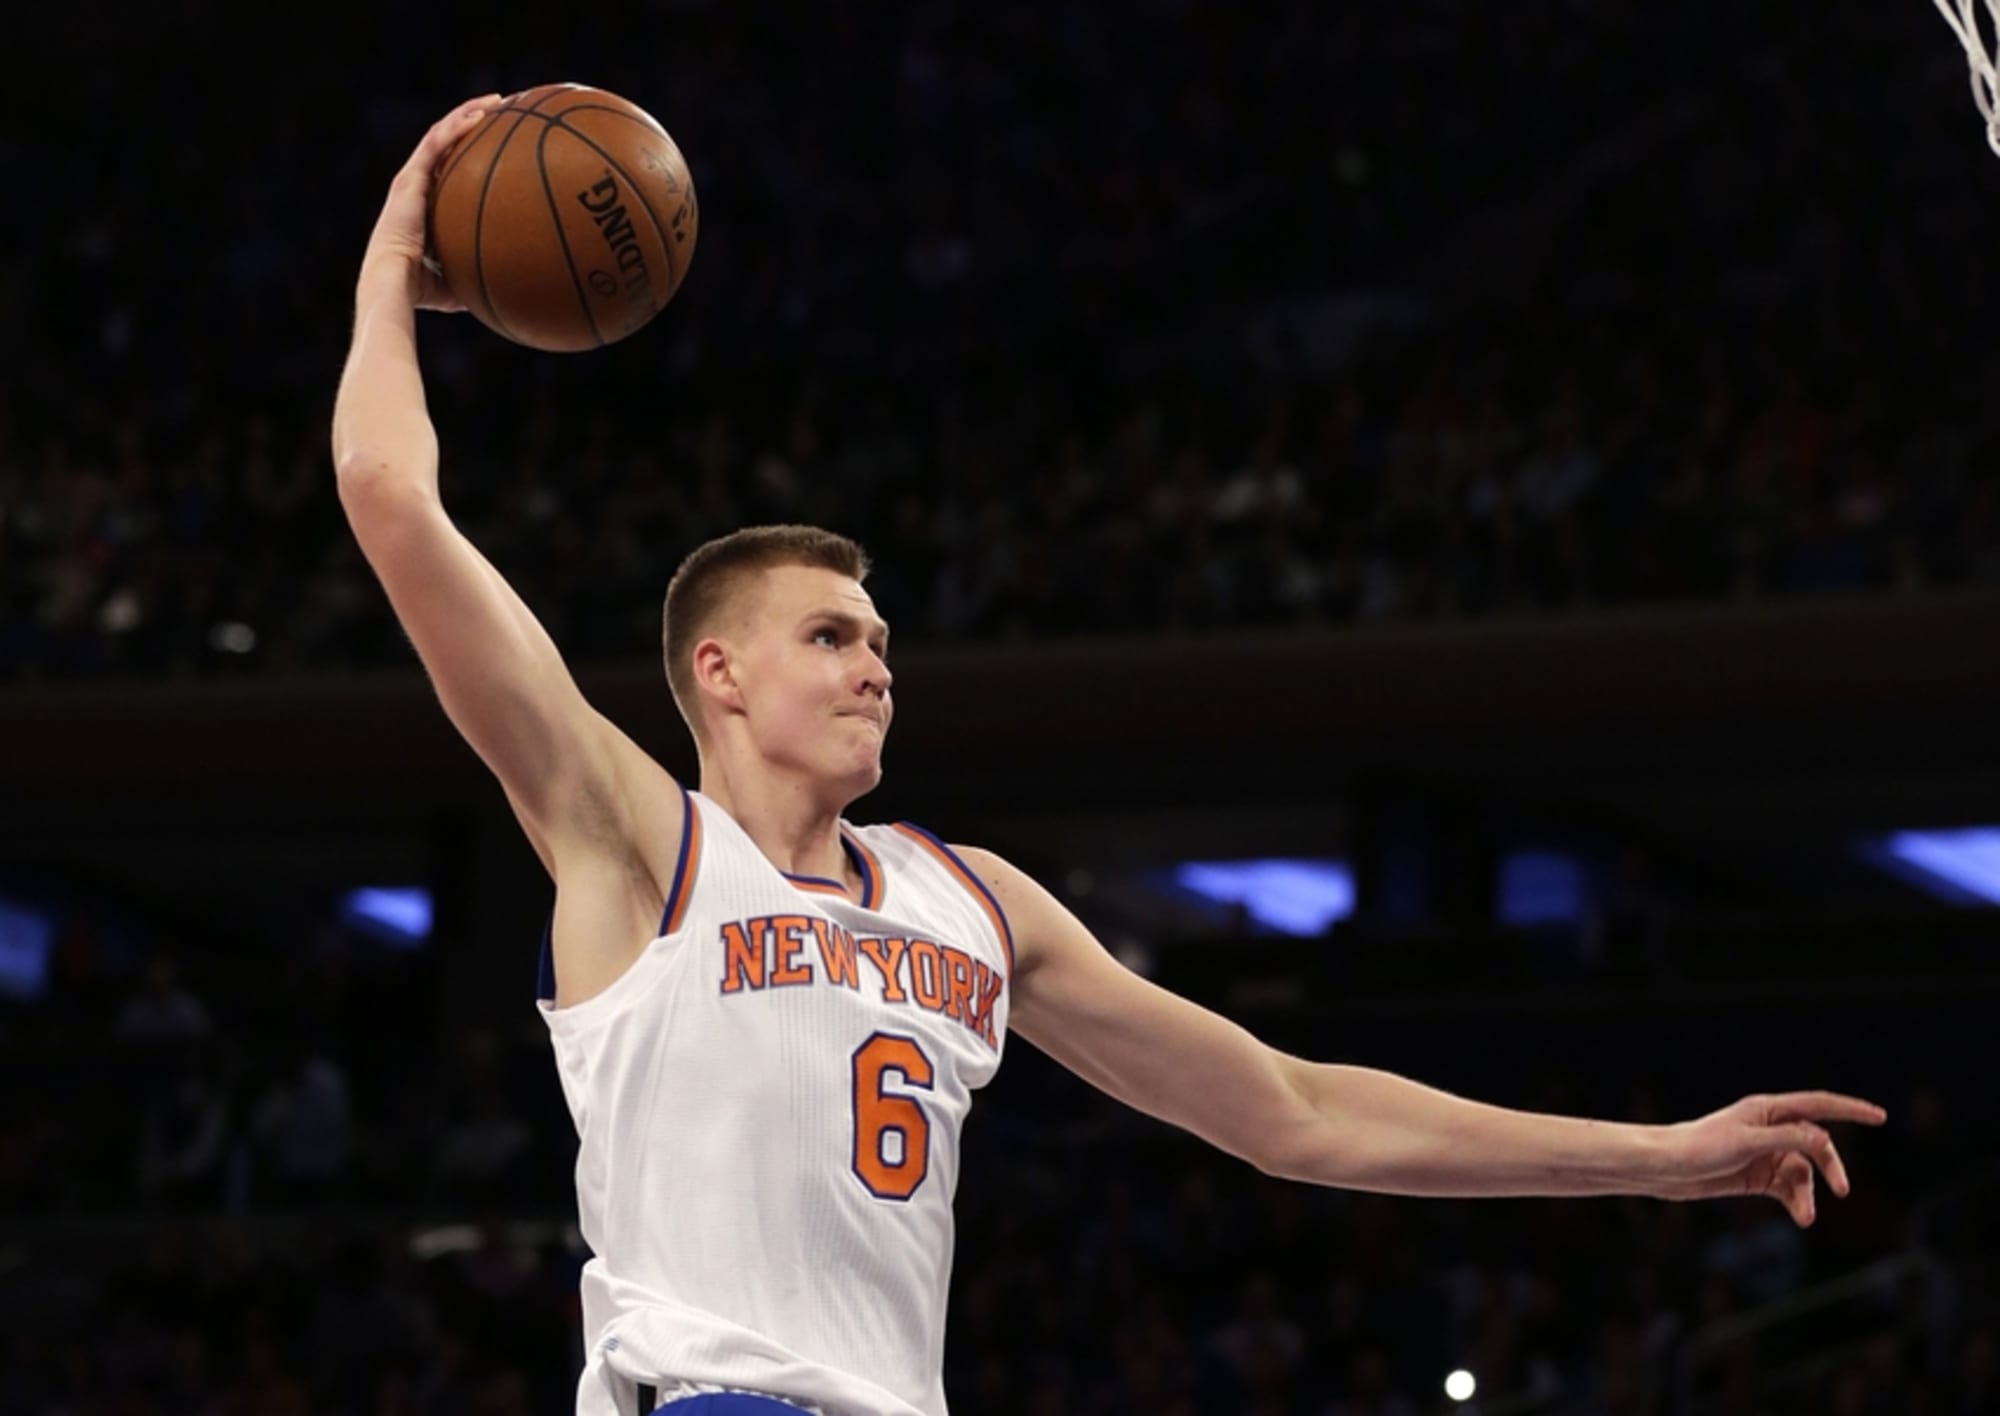 New York Knicks rookie Kristaps Porzingis fourth in jersey sales this  season - ESPN